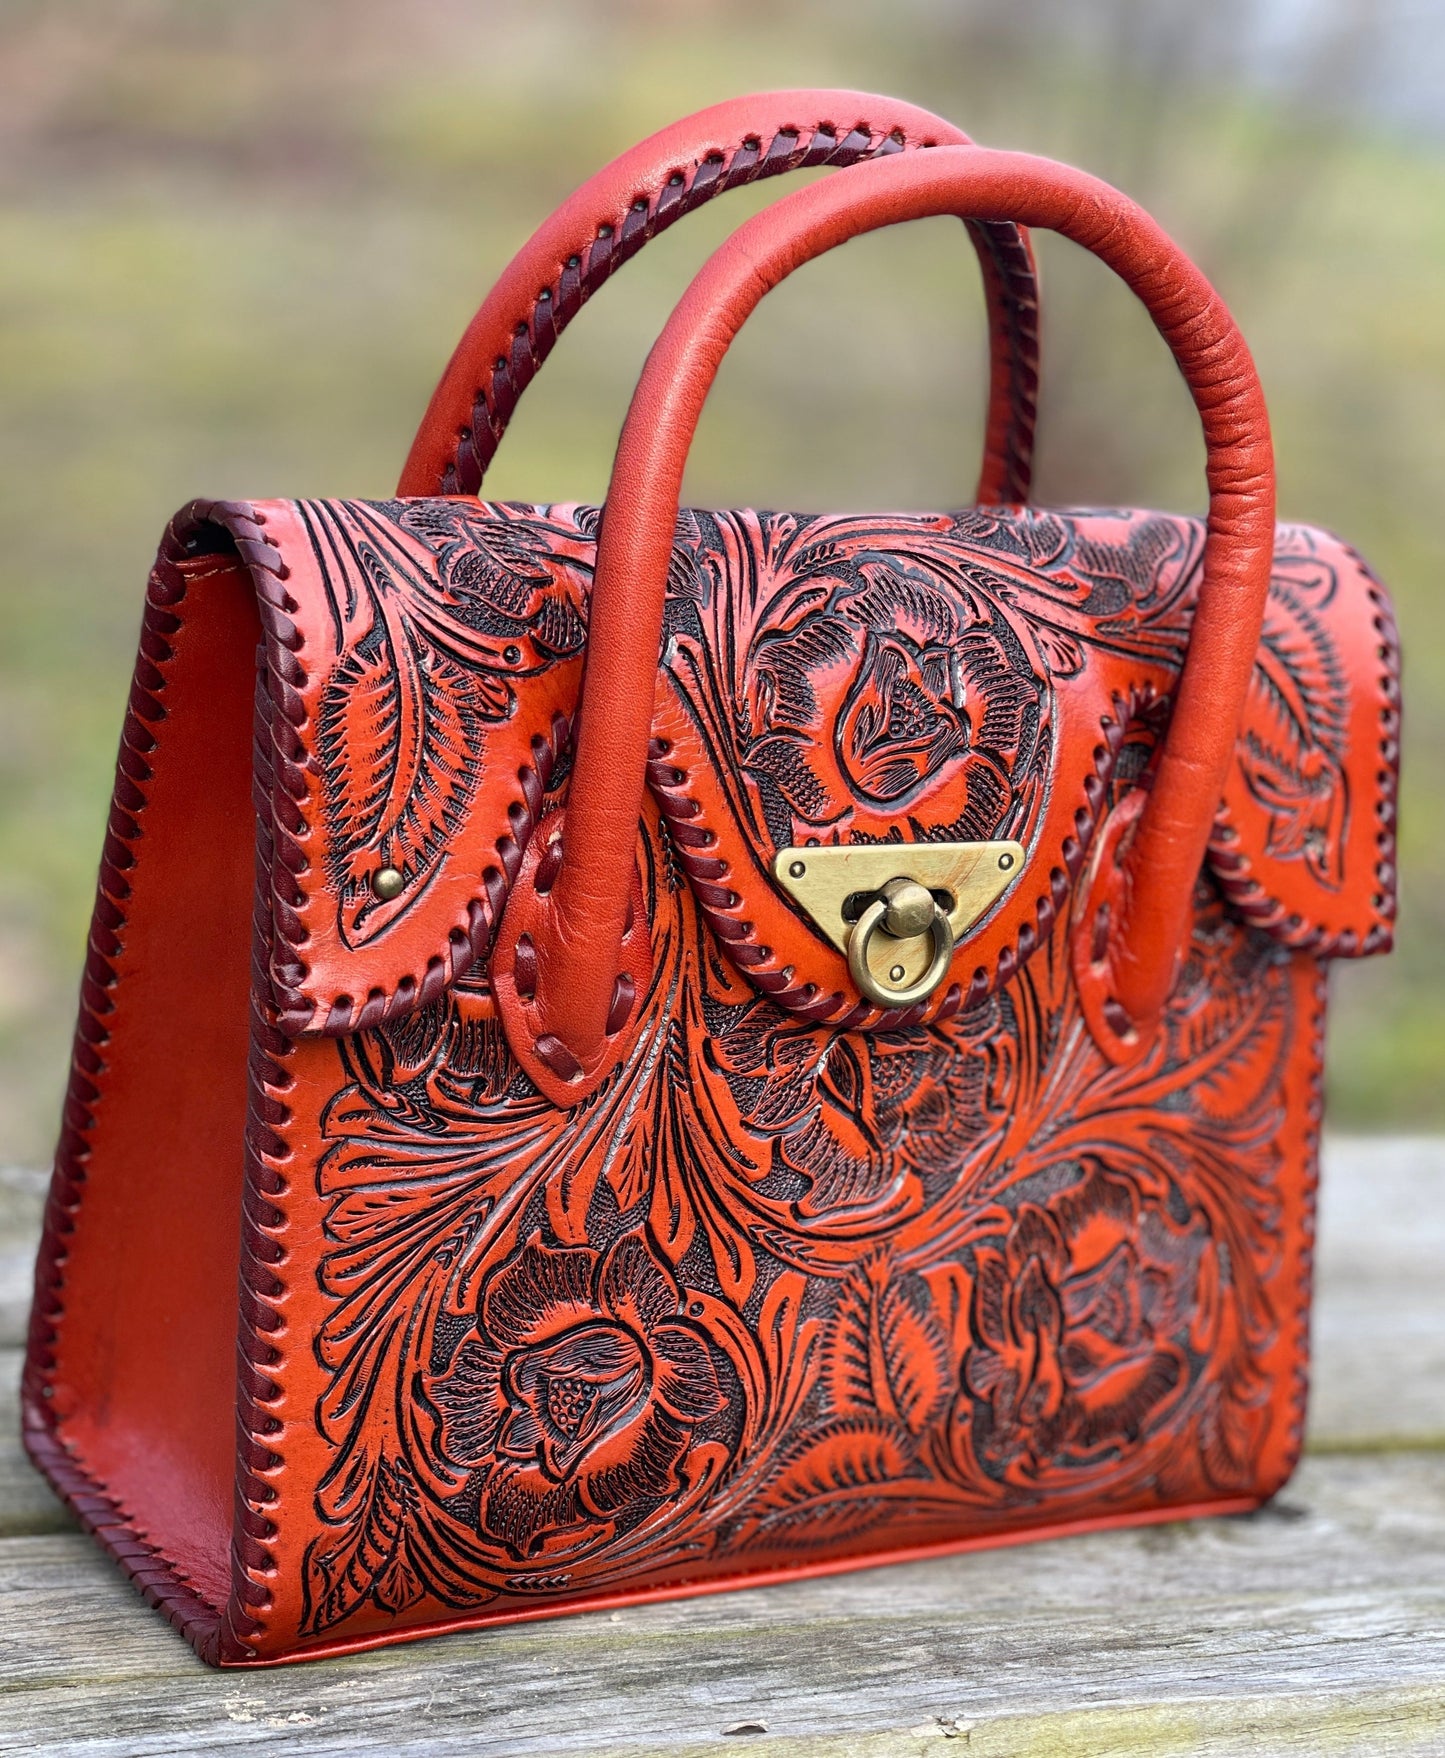 ALLE Satchel- Doctor Bag "MINI ROMMY" more colors - ALLE Handbags